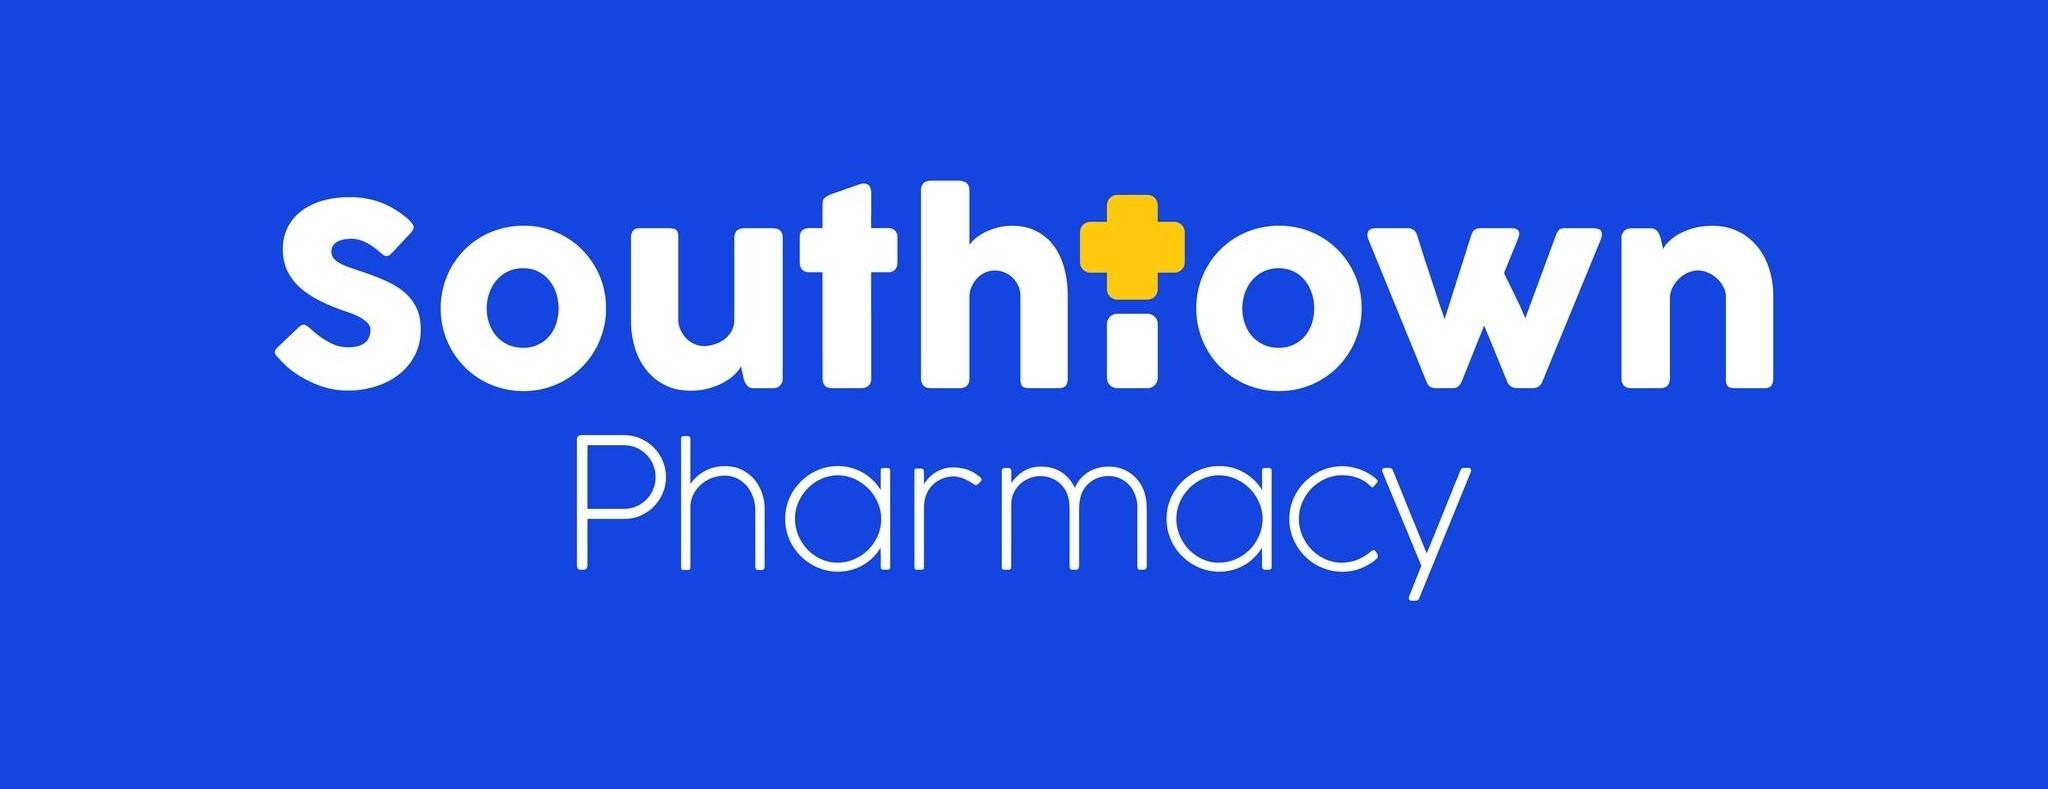 Southtown Pharmacy